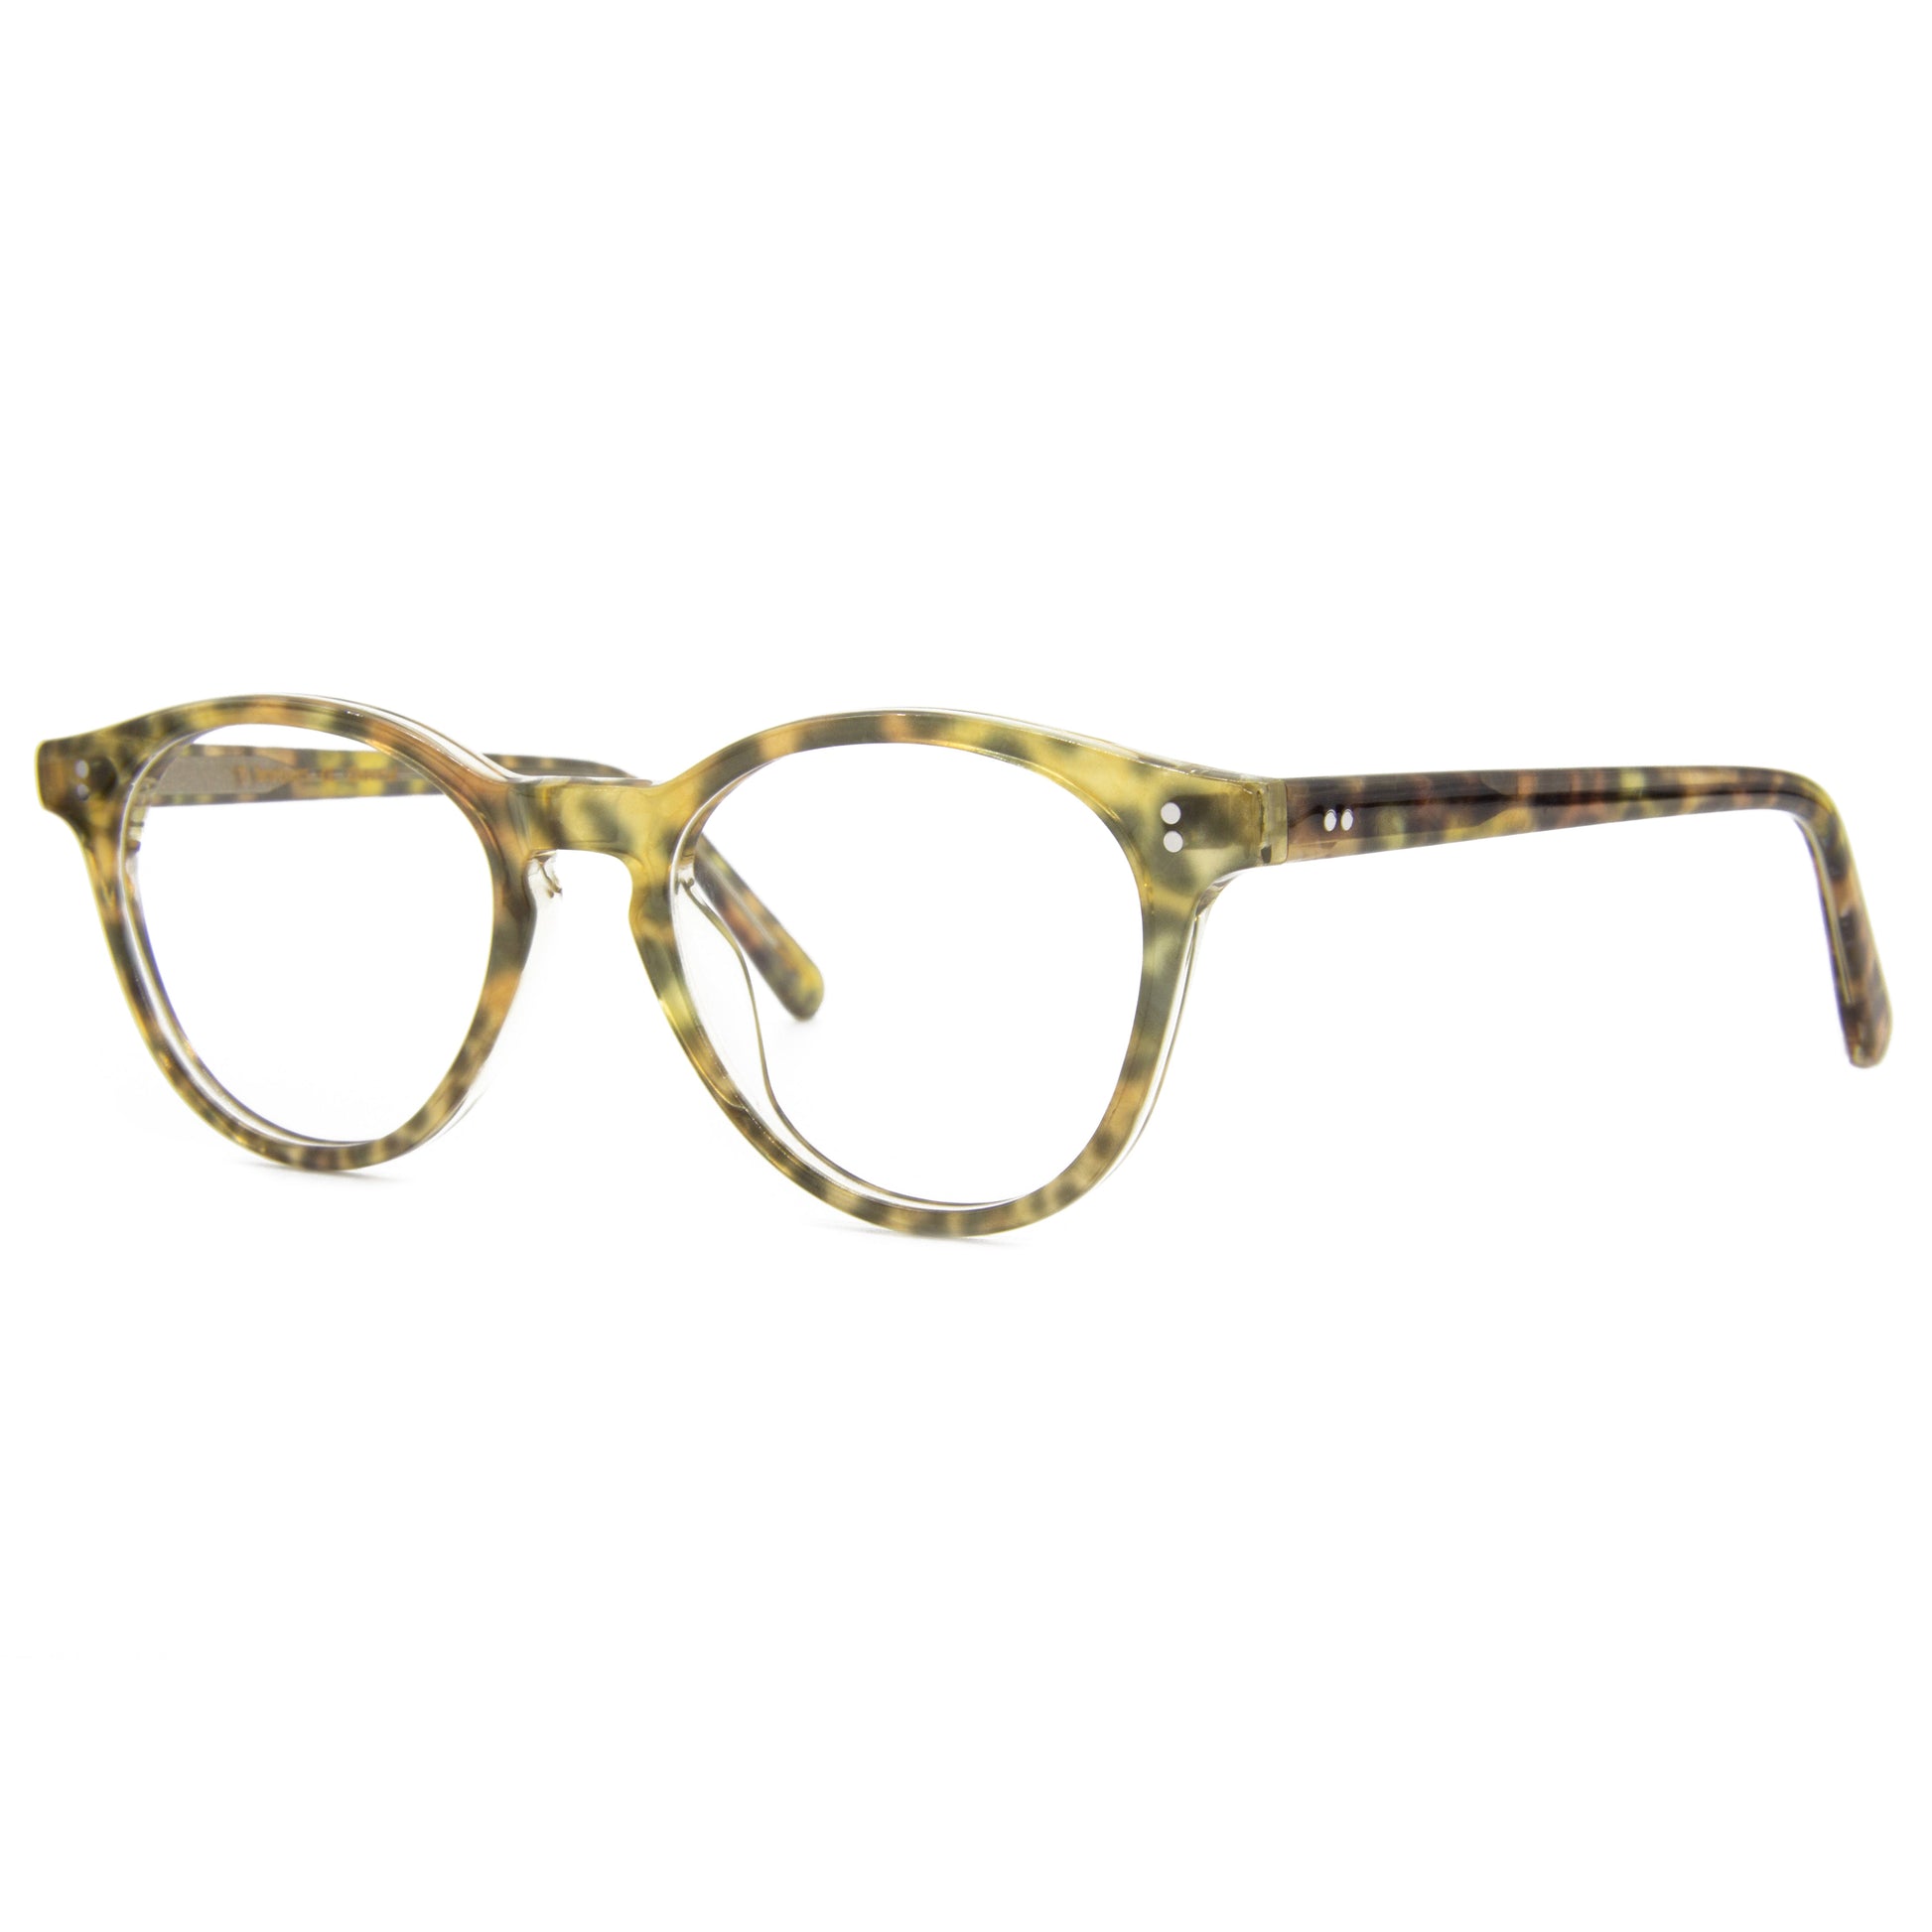 3 brothers - Chantal - Leopard - Prescription Glasses - Side